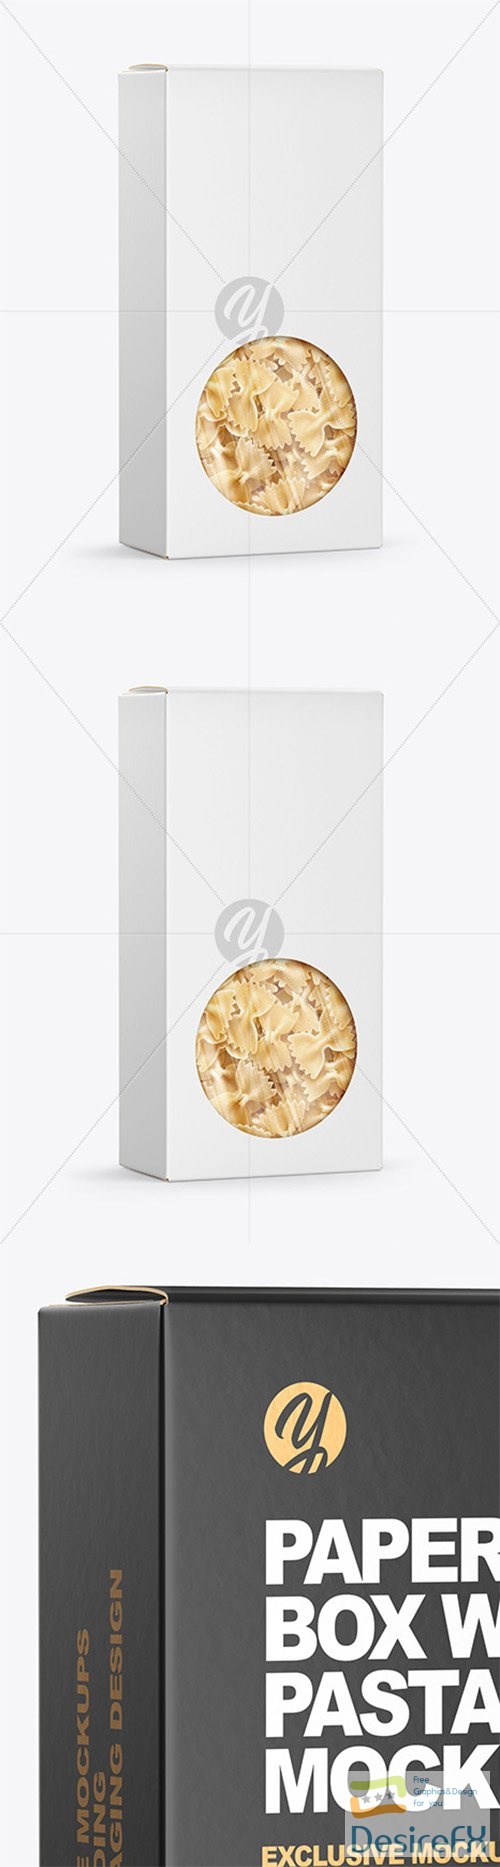 Paper Box with Farfalle Pasta Mockup 69152 TIF